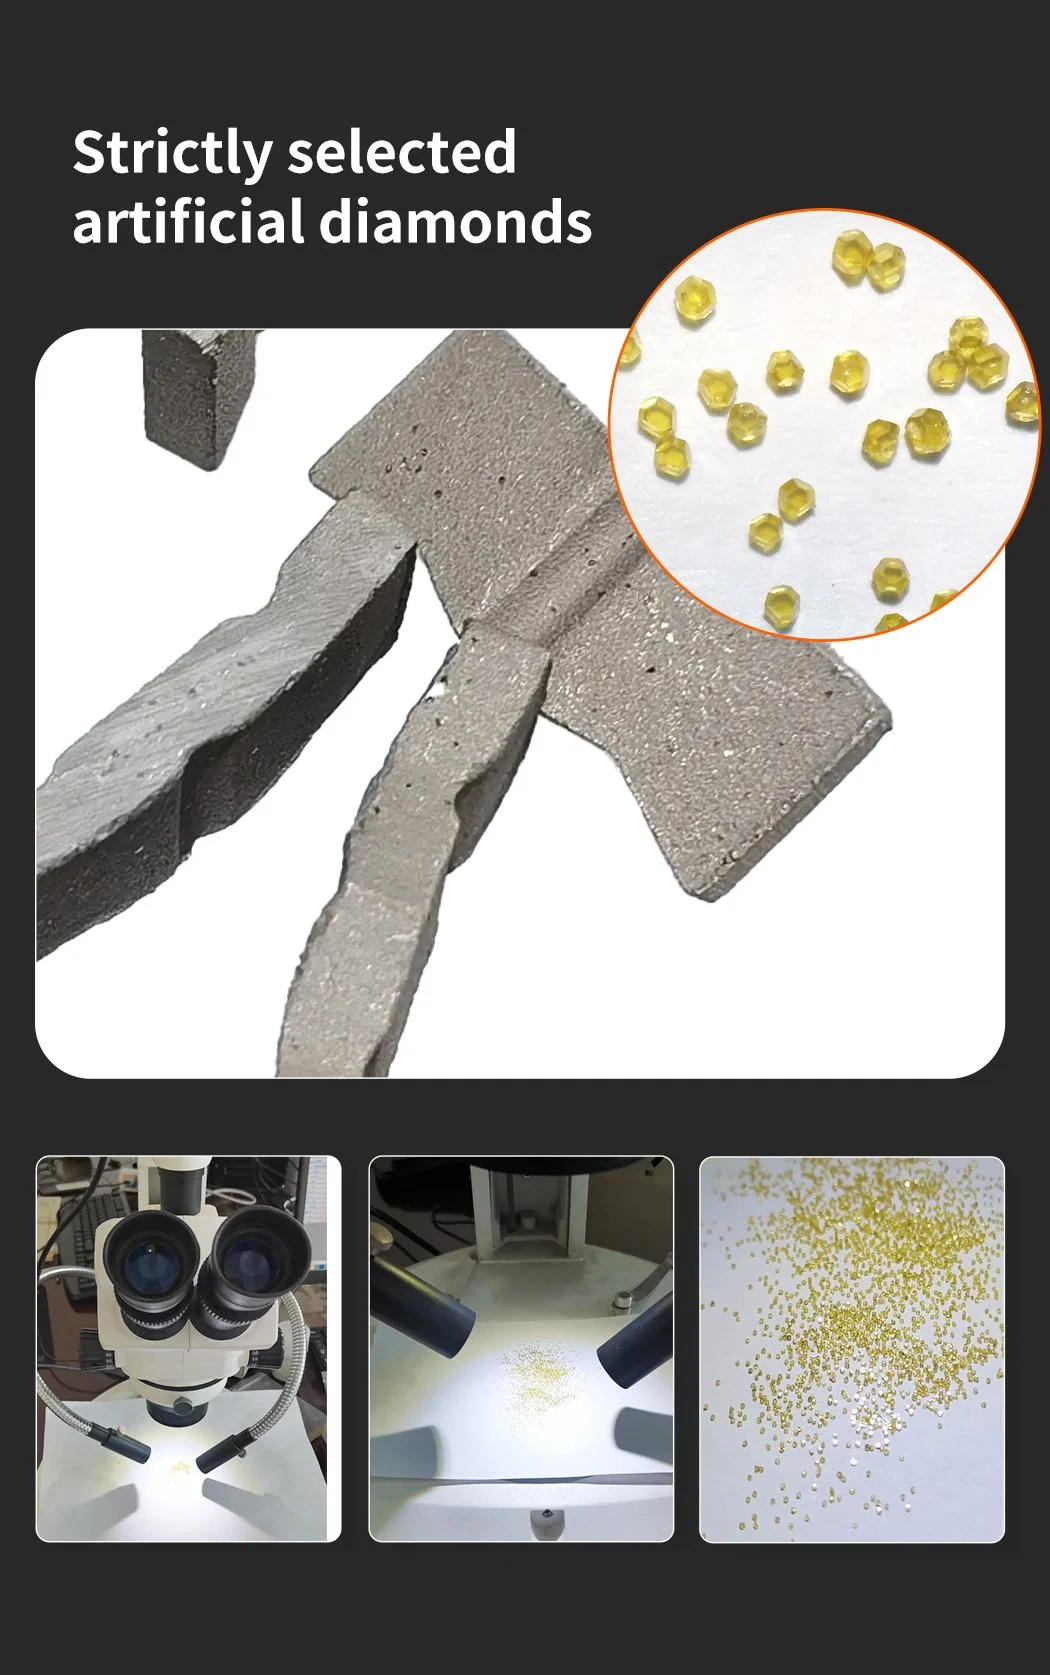 China Factory Long Lifespan Diamond Saw Blade Wall Saw Hole Saw Core Drill Bit Segments for Hard Granite Diamond Cutter